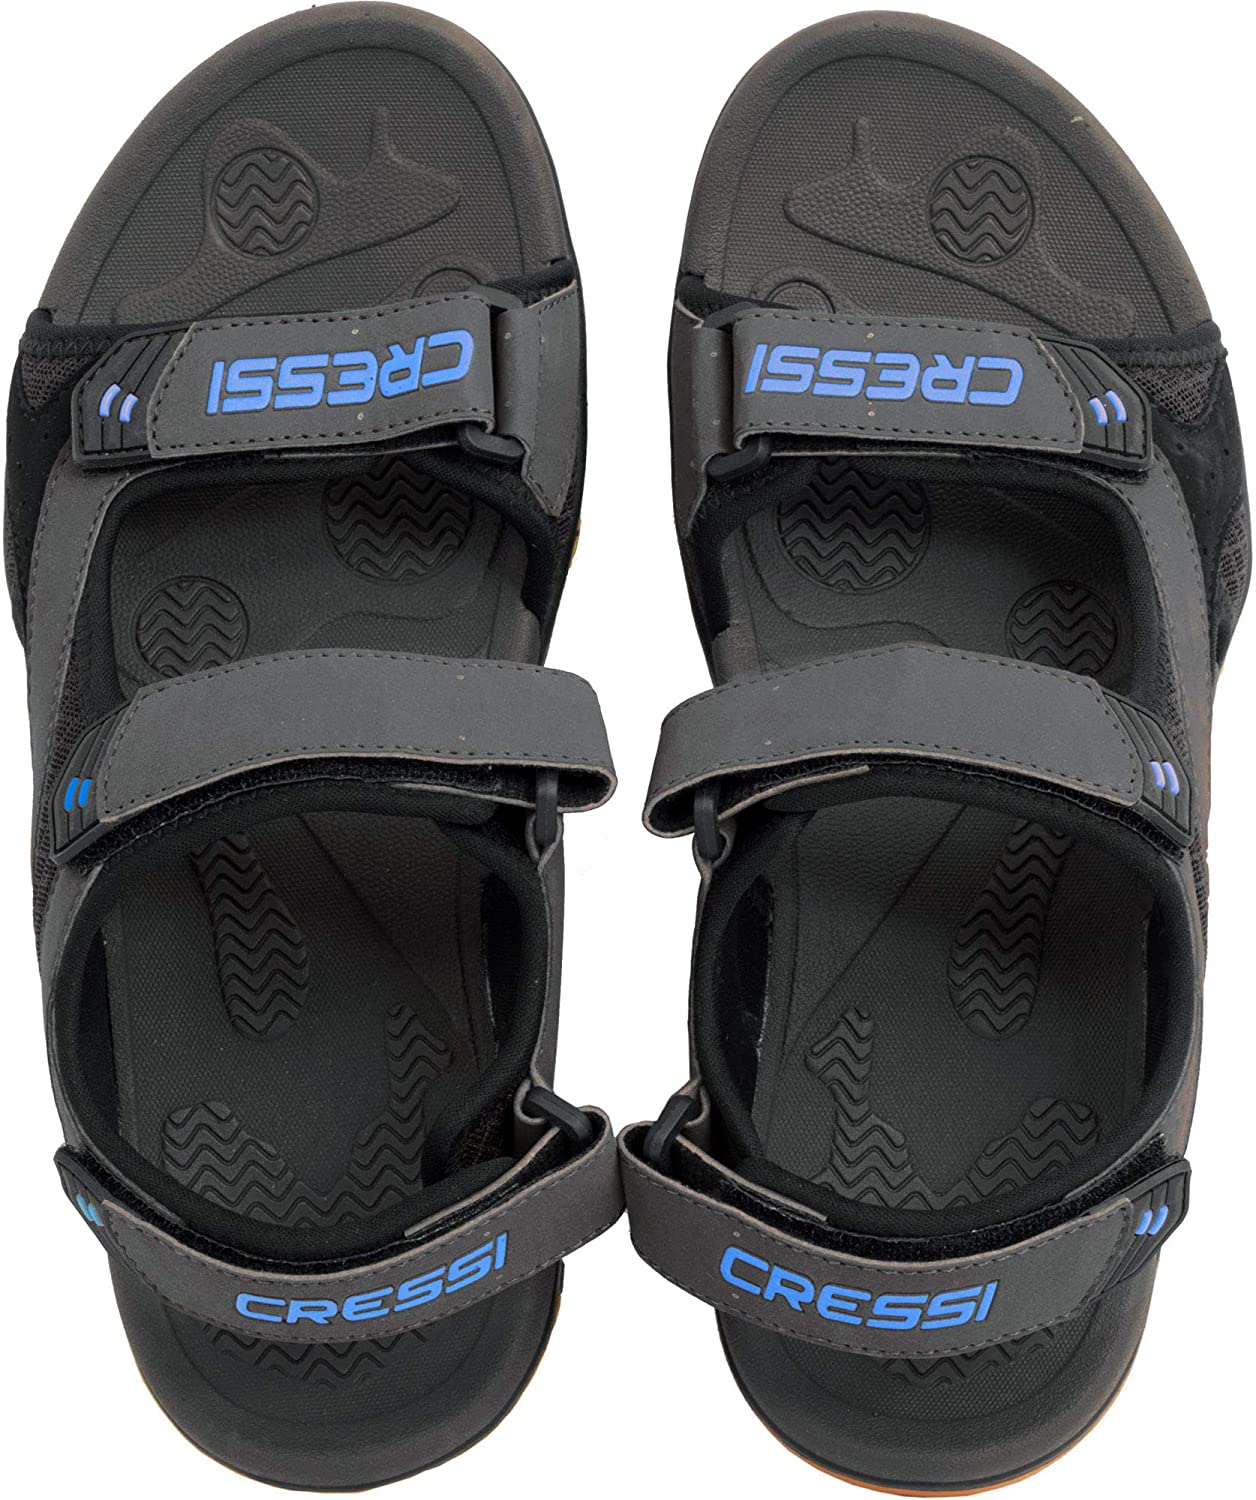 Cressi Sports Outdoor Sandals